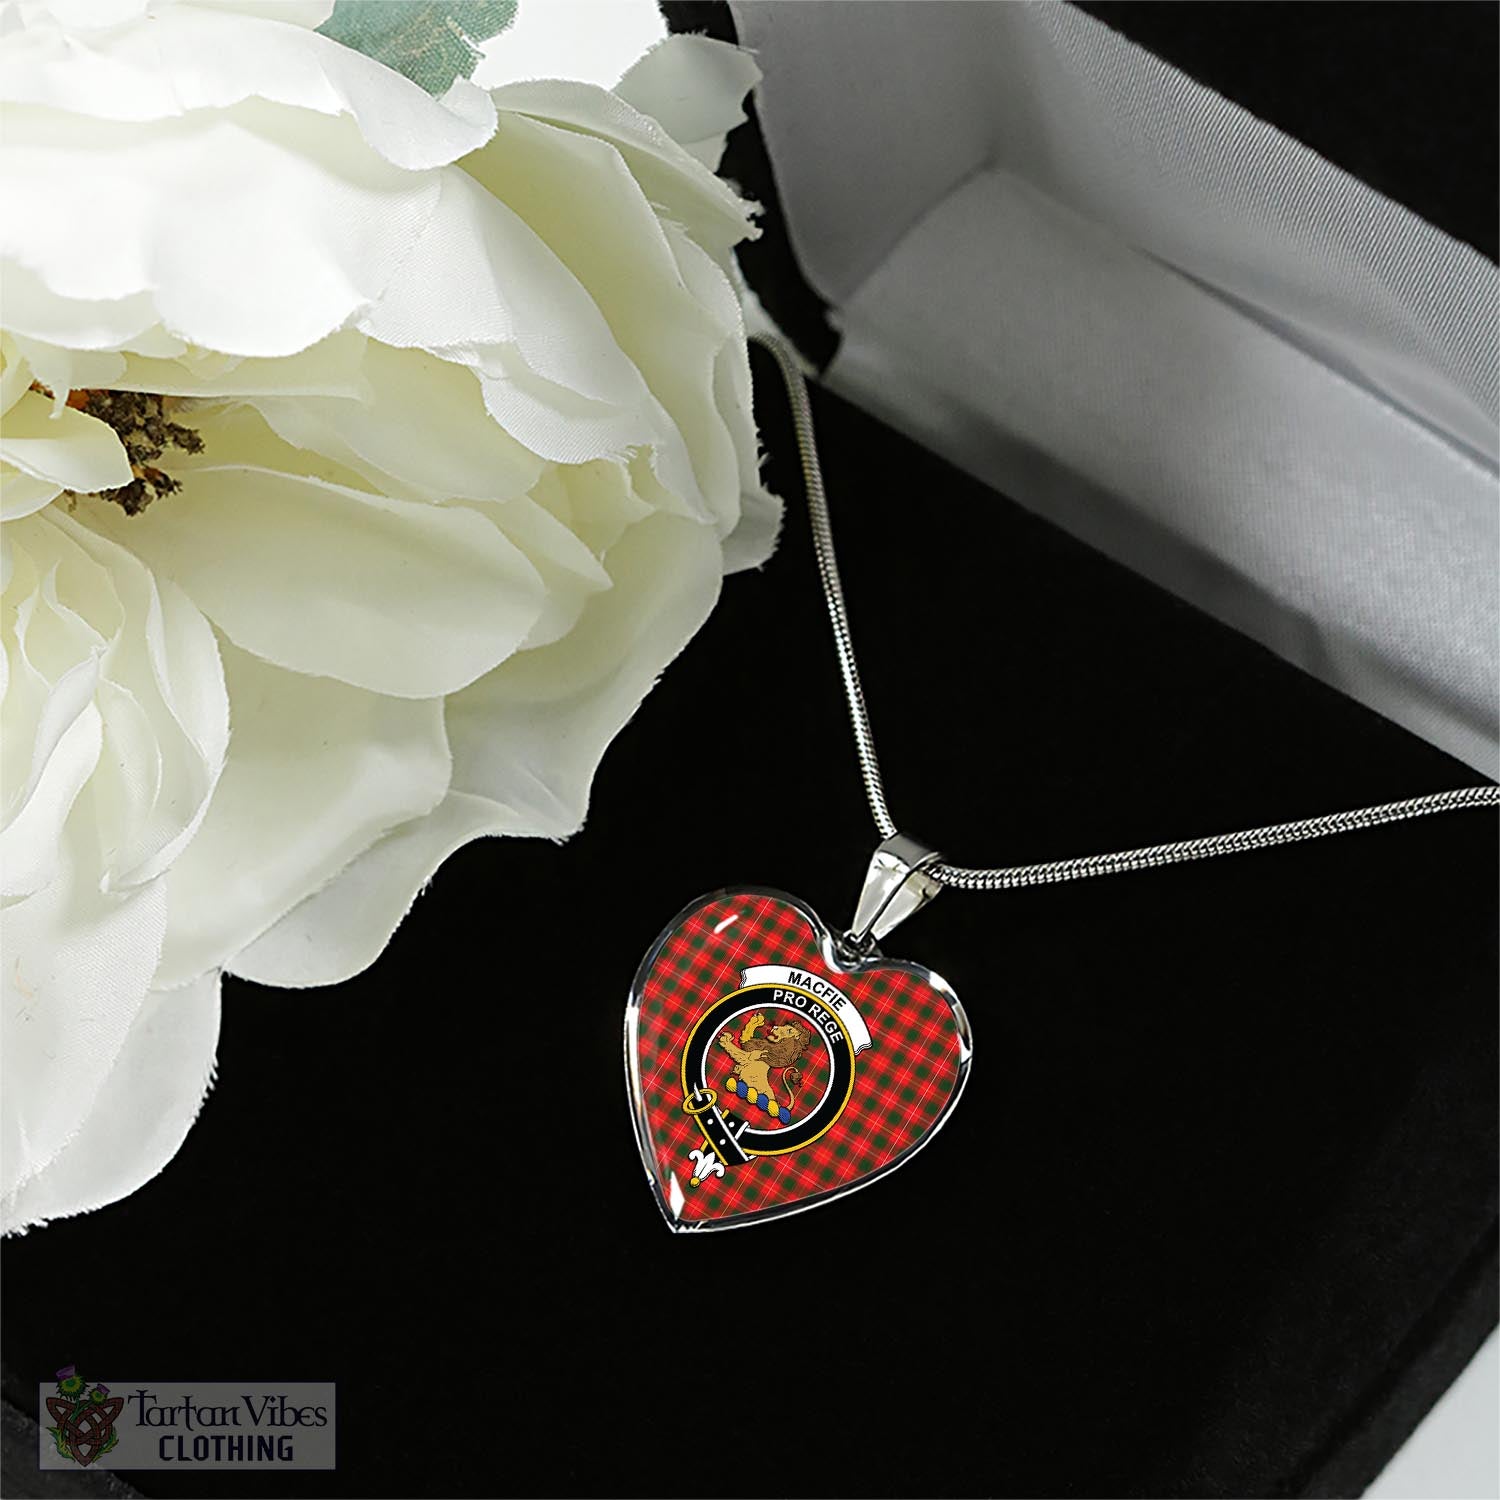 Tartan Vibes Clothing MacFie Modern Tartan Heart Necklace with Family Crest